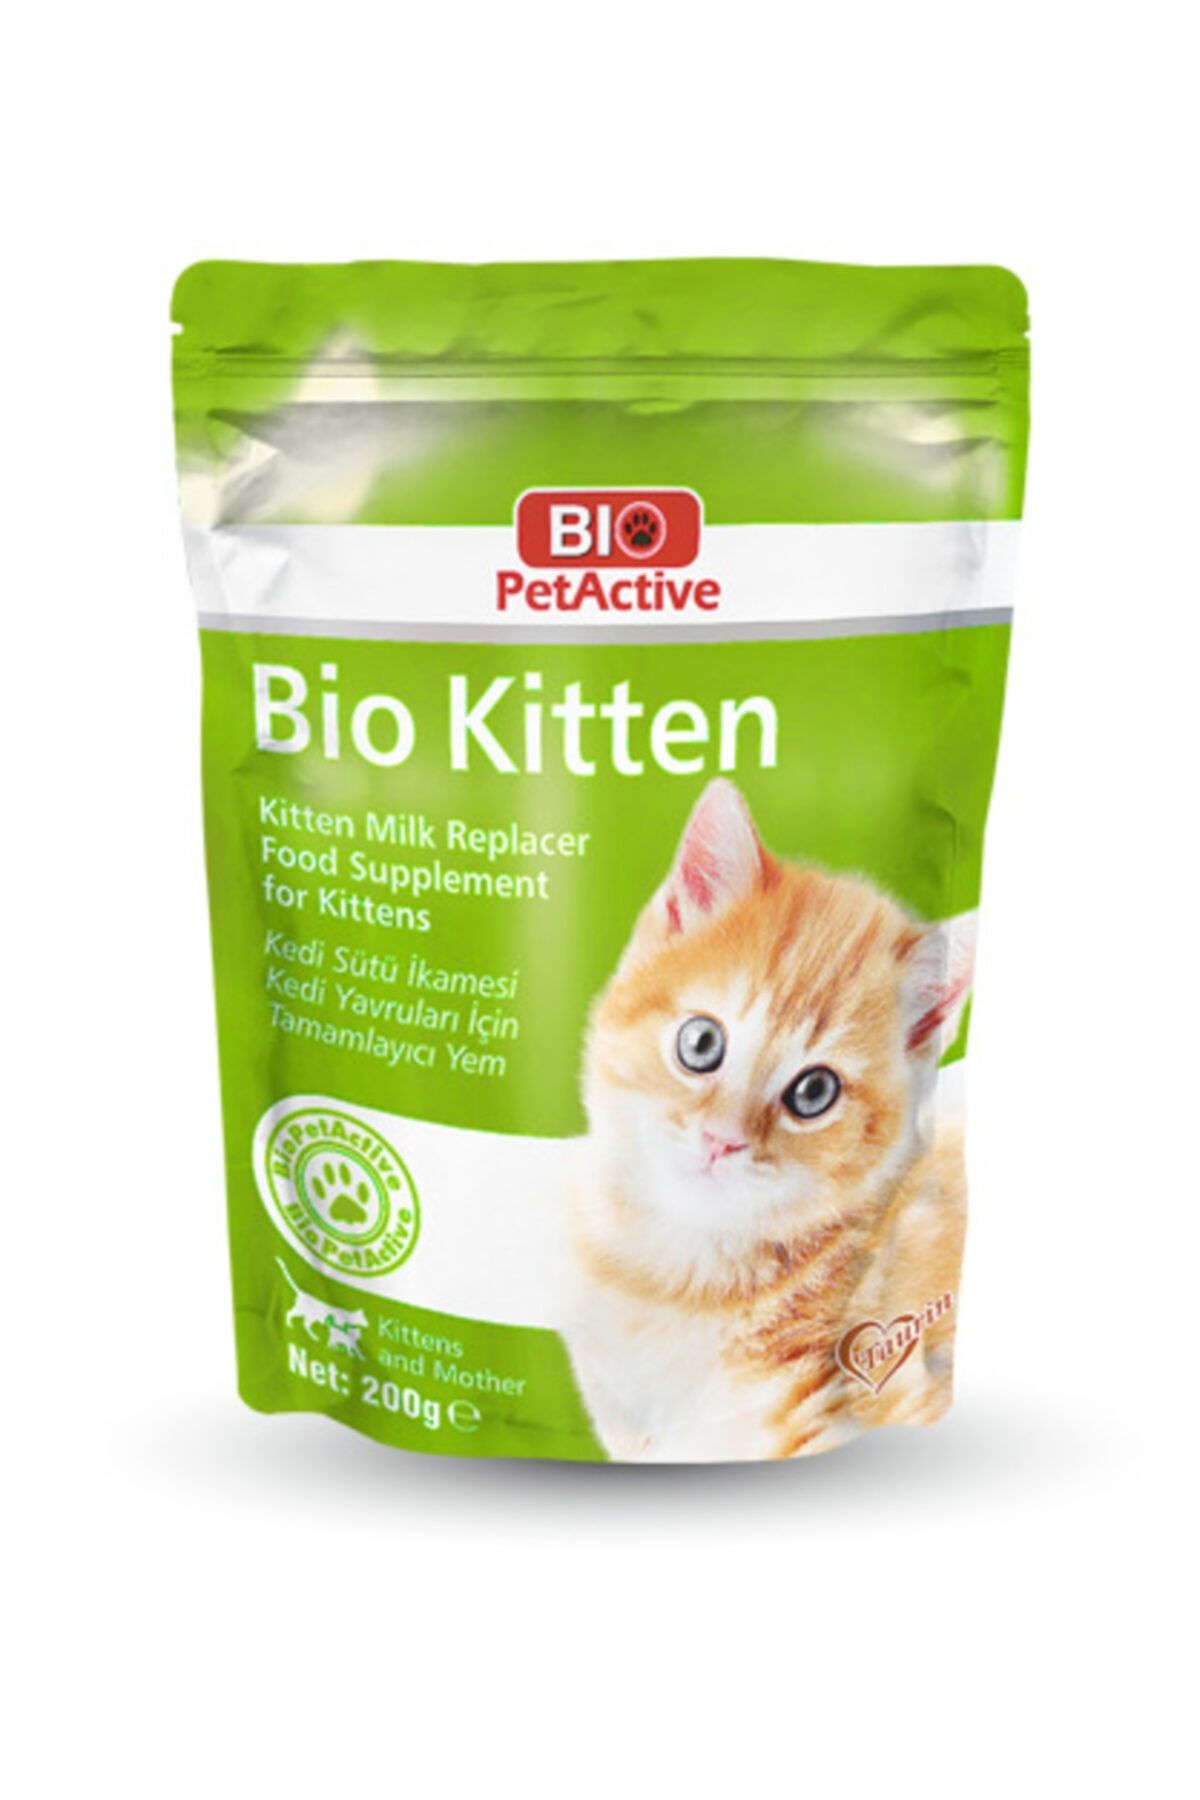 Bio PetActive Biopetactive Yavru Kedi Süt Tozu 200gr Bio Kitten Milk